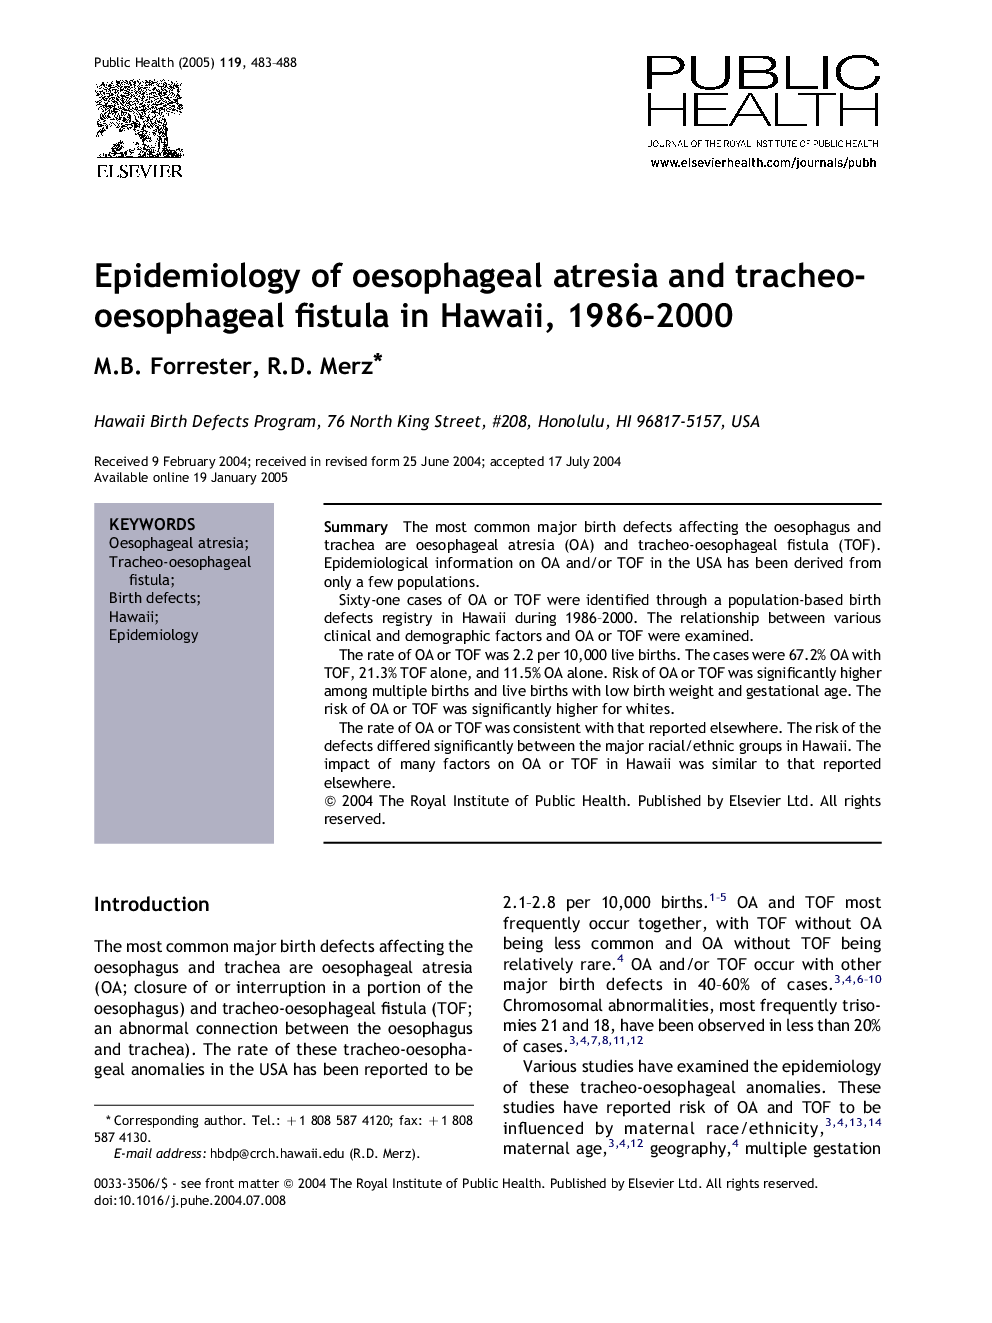 Epidemiology of oesophageal atresia and tracheo-oesophageal fistula in Hawaii, 1986-2000